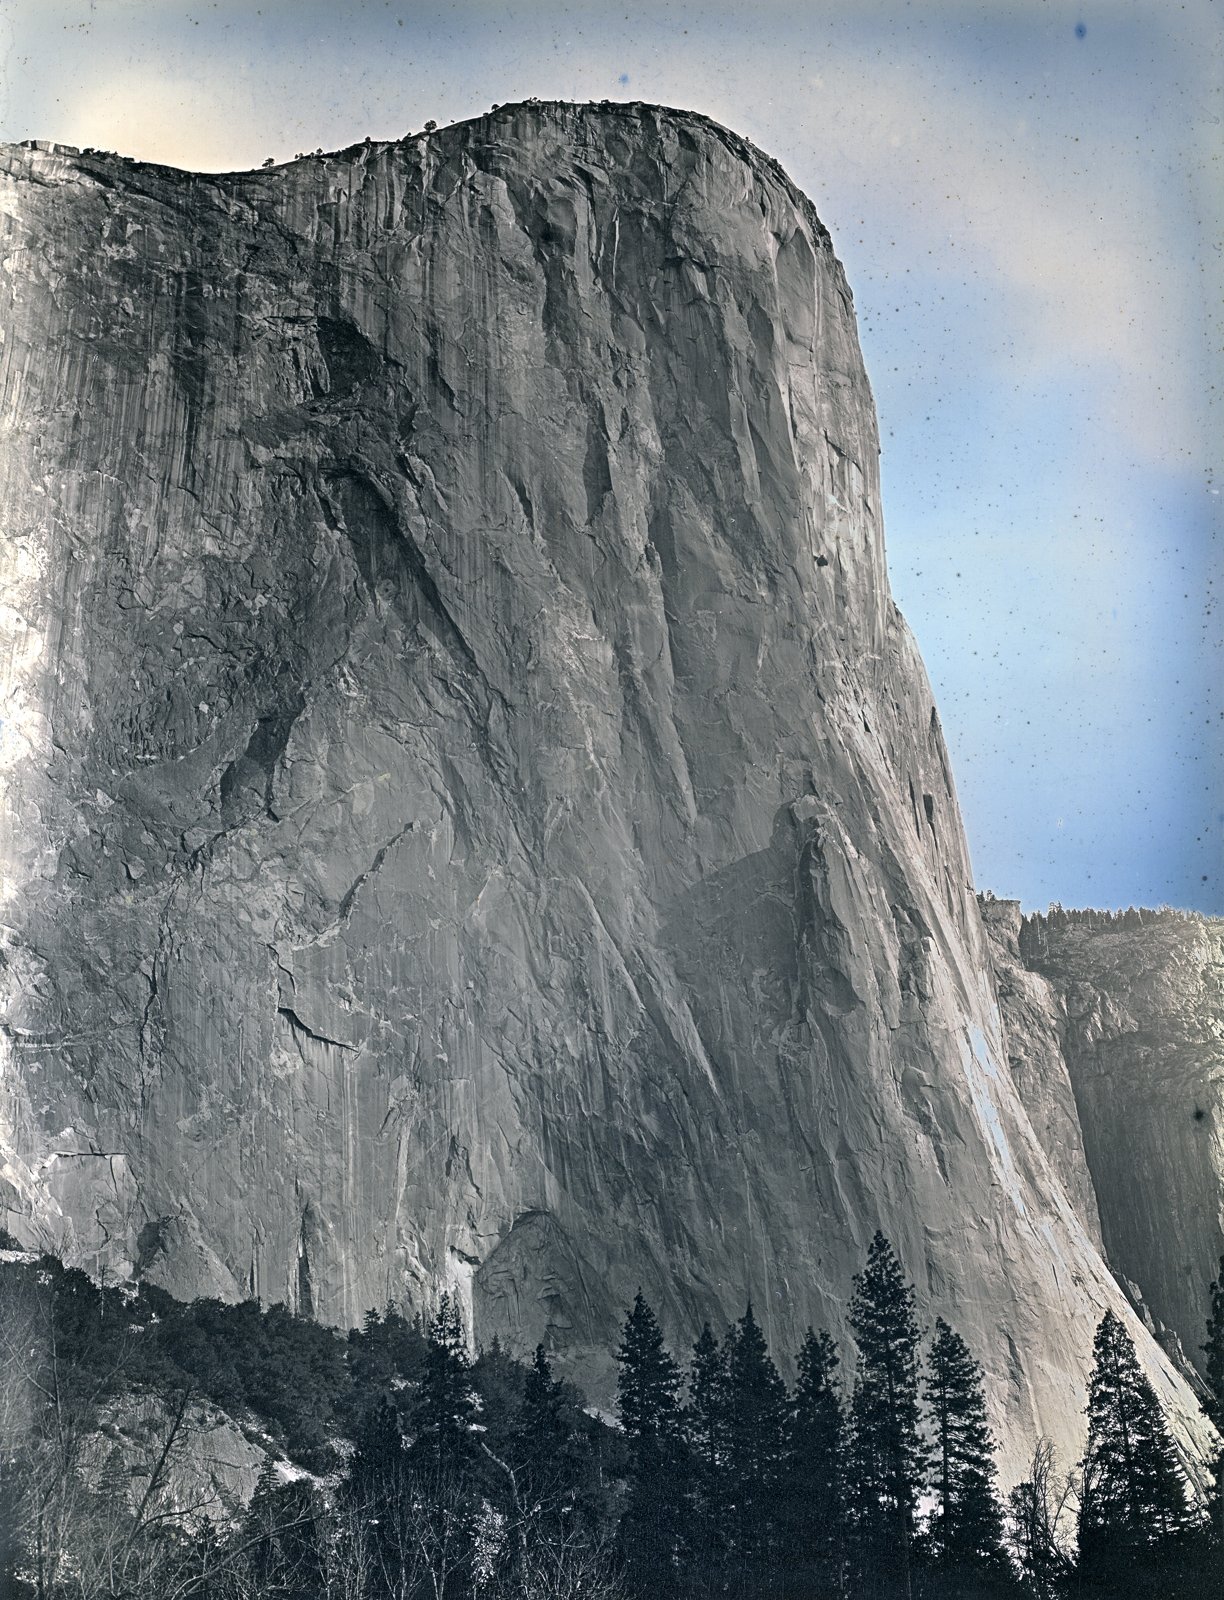 El Capitan, Yosemite, CA, 2012, Daguerreotype, 8.5 x 6.5 inches